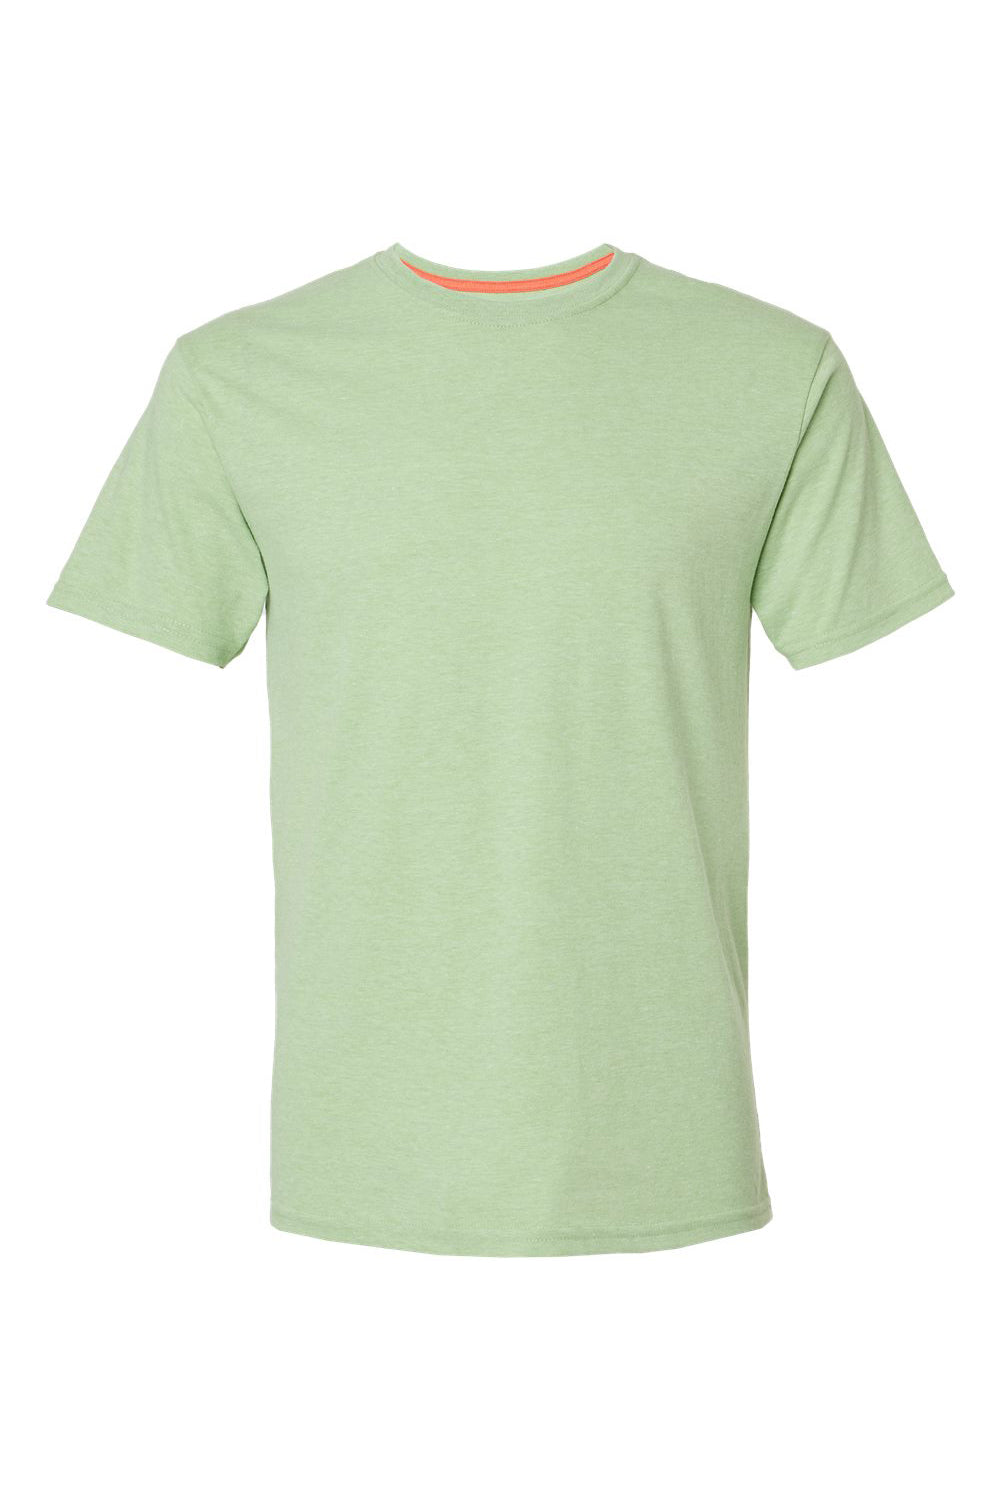 Kastlfel 2010 Mens RecycledSoft Short Sleve Crewneck T-Shirt Green Tea Flat Front